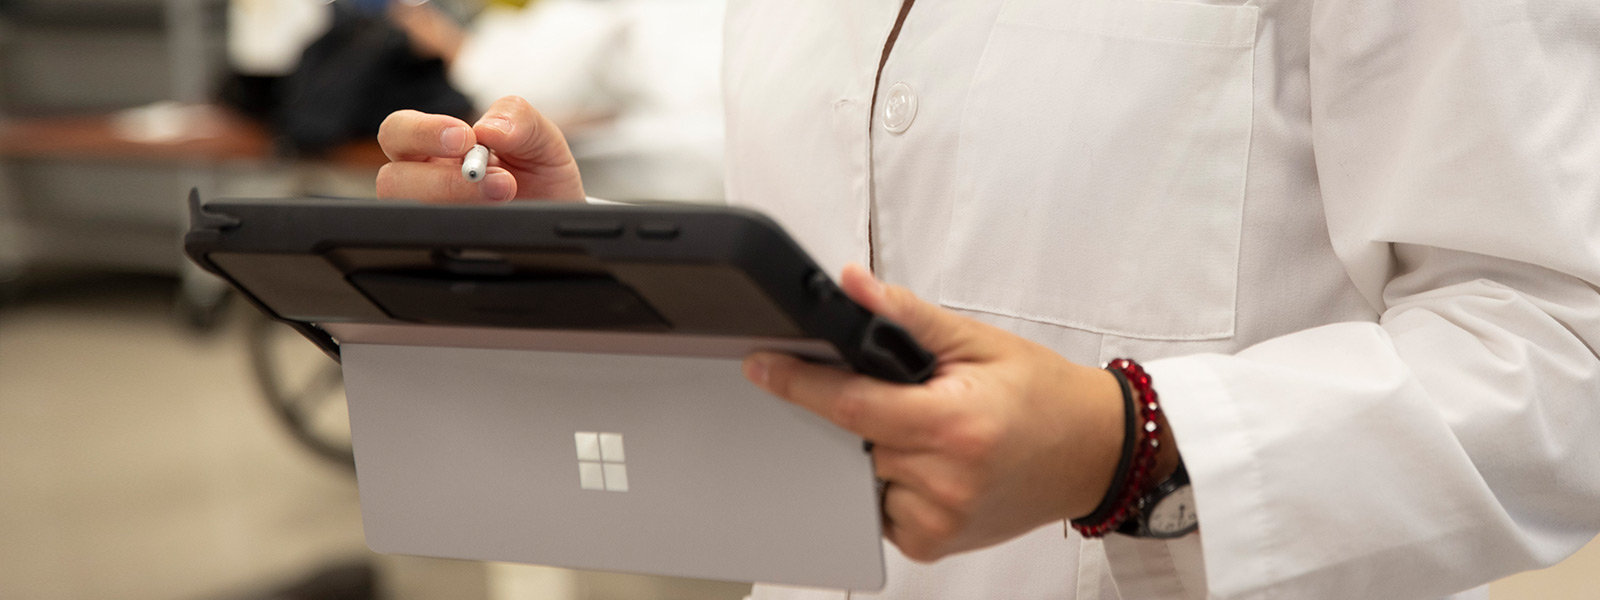 Surface Go 2: Compact Light ラップトップ - 法人向け Microsoft Surface